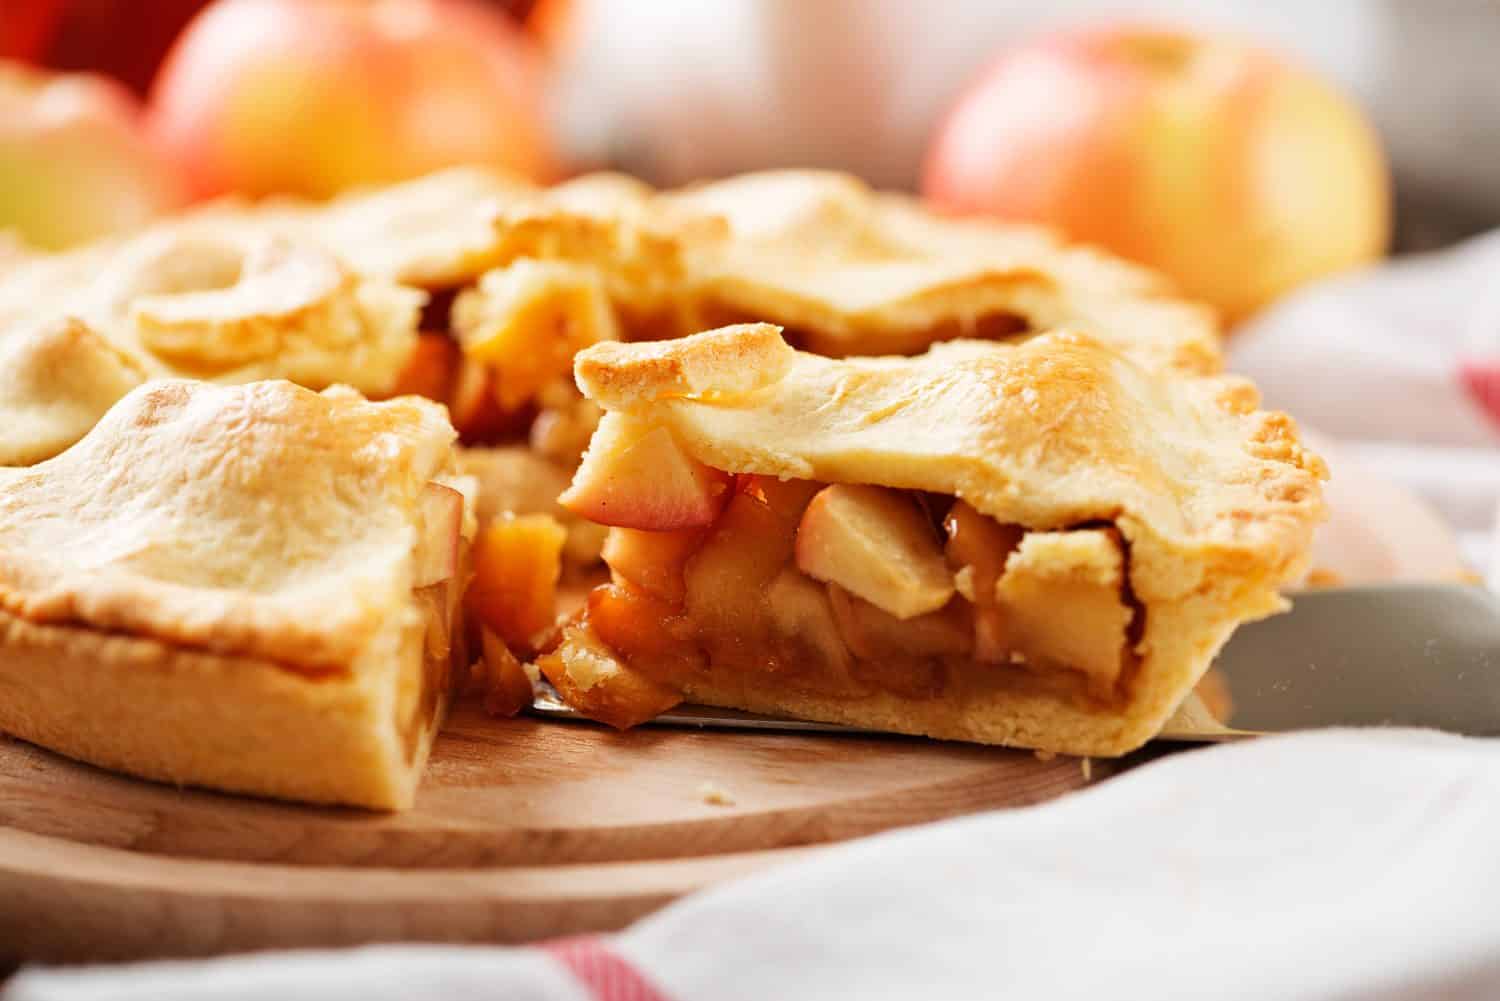 Homemade apple pie